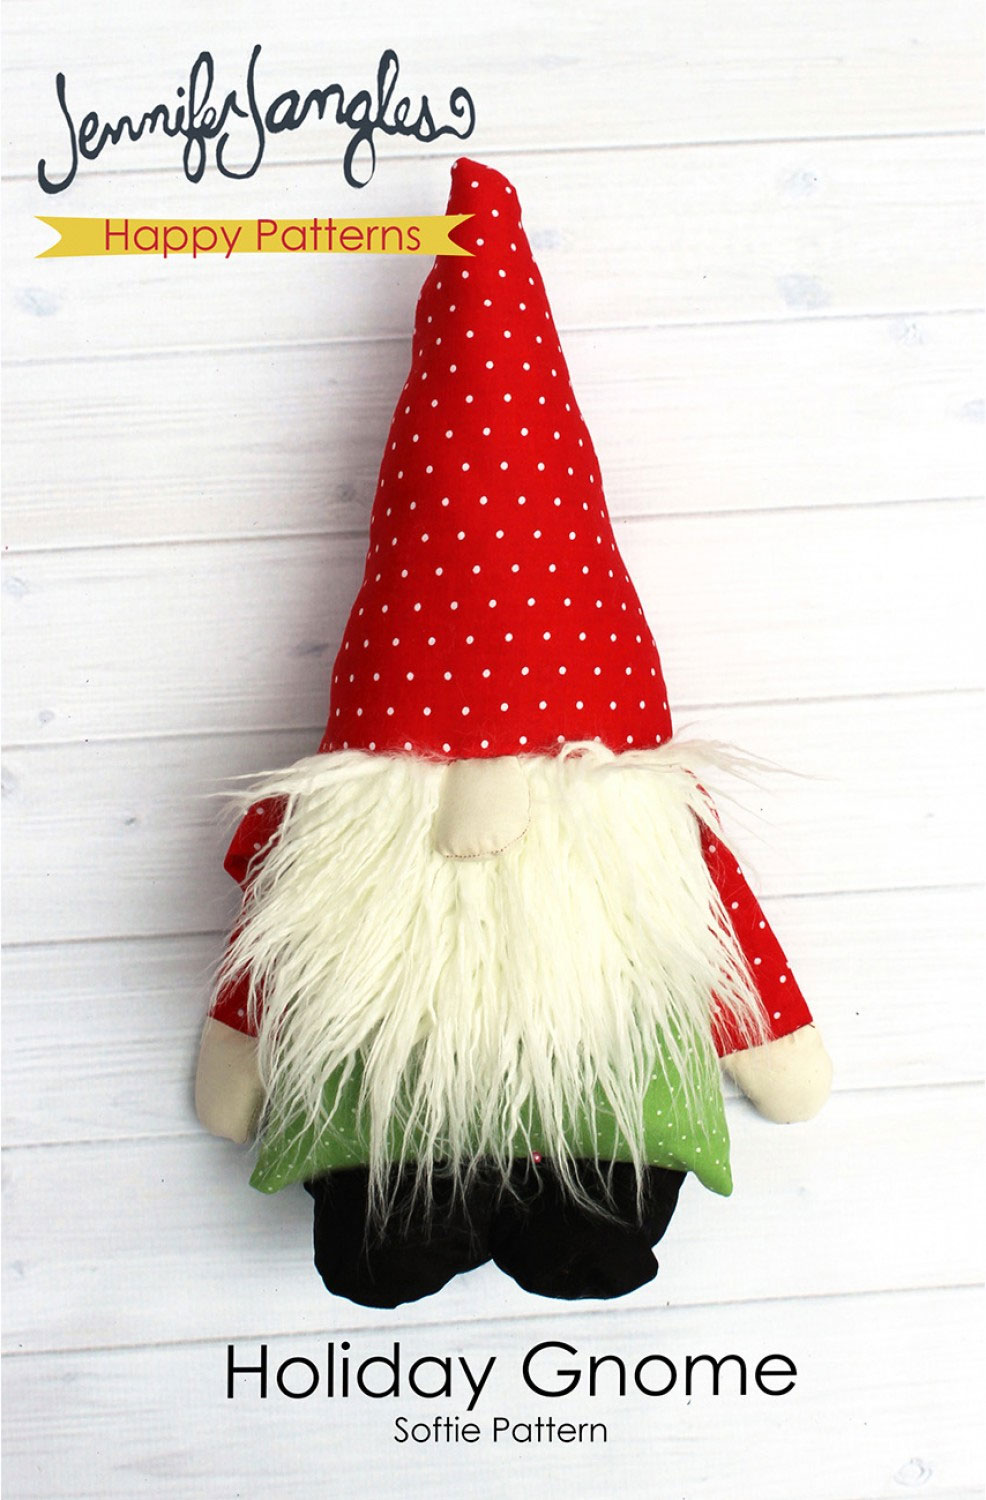 Holiday-Gnome-Softie-sewing-pattern-Jennifer-Jangles-front